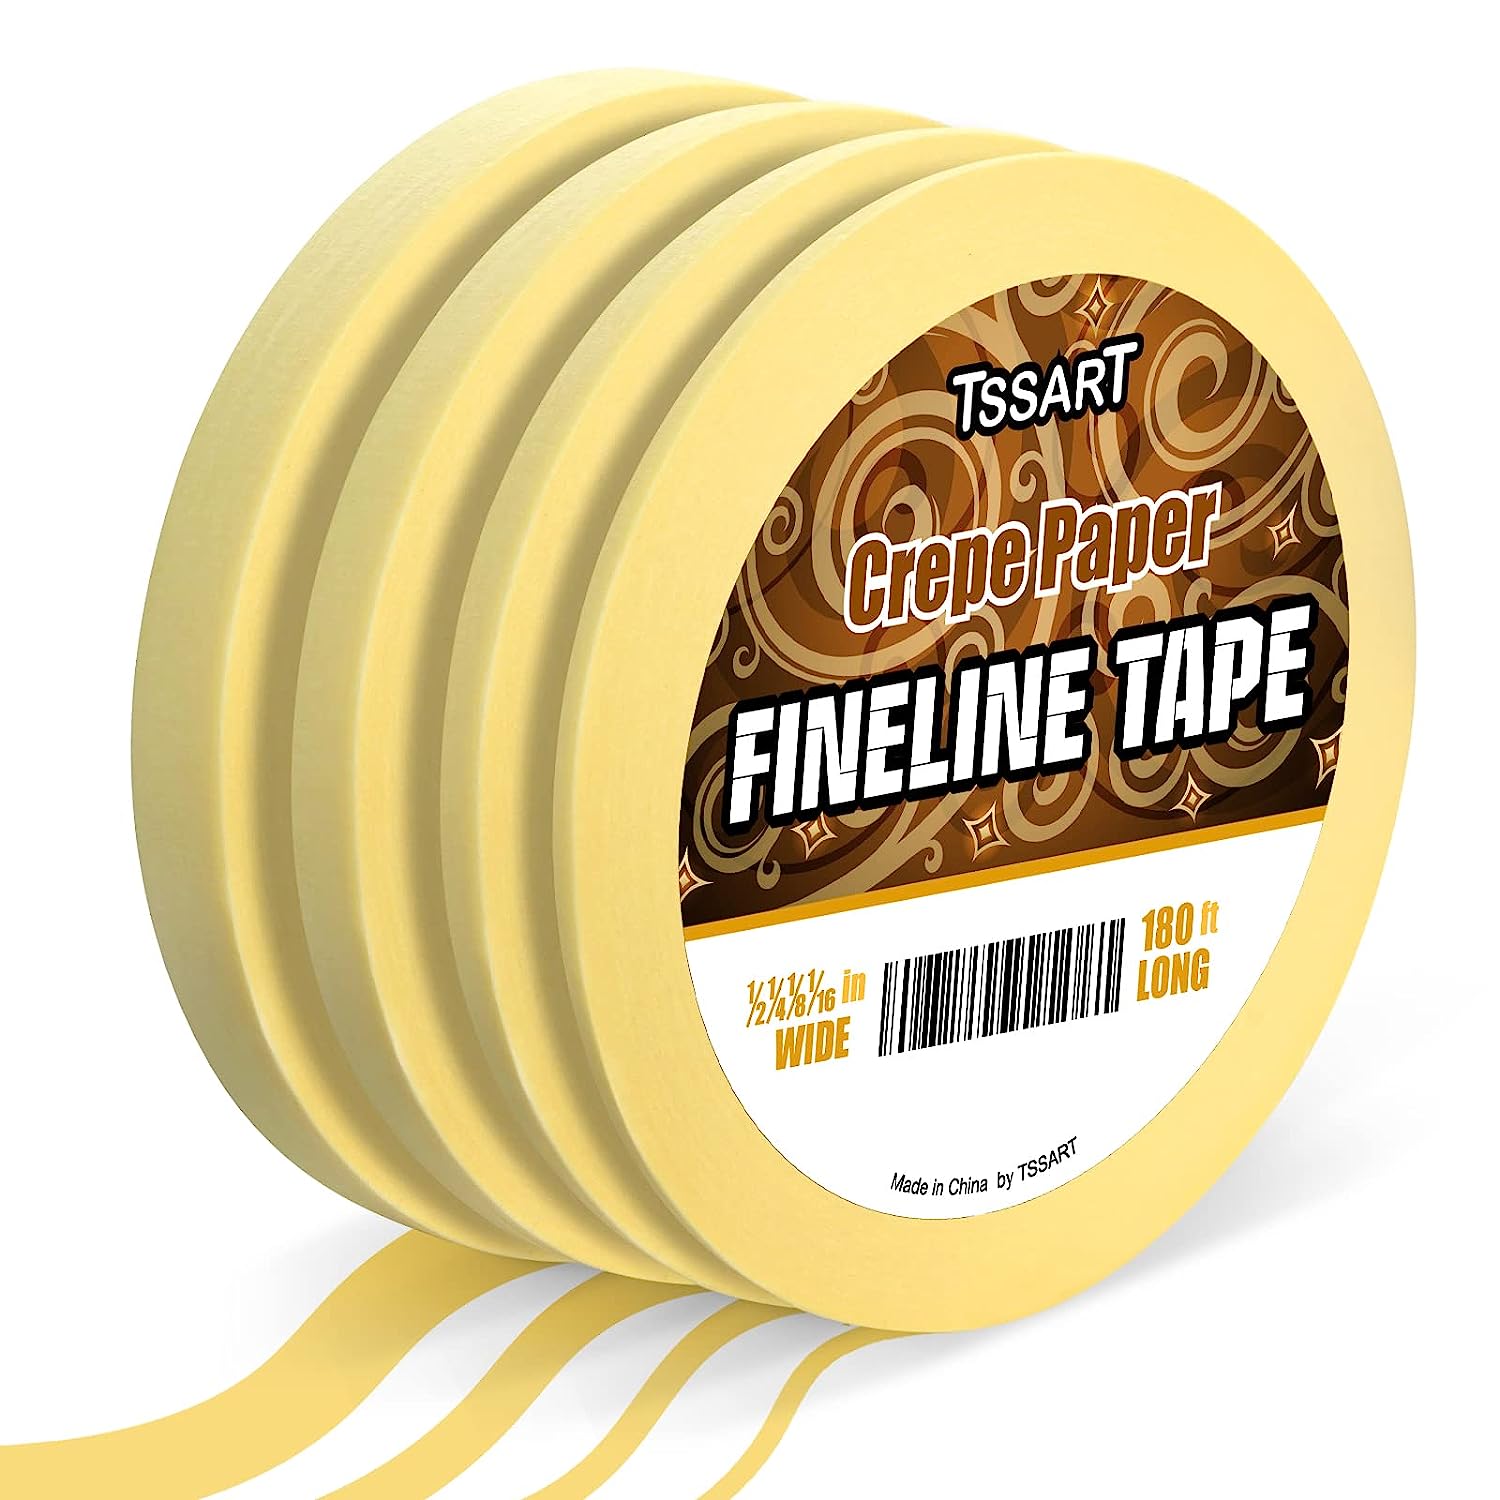 LiME LiNE 1/8 Fineline Automotive pinstriping Masking Tape